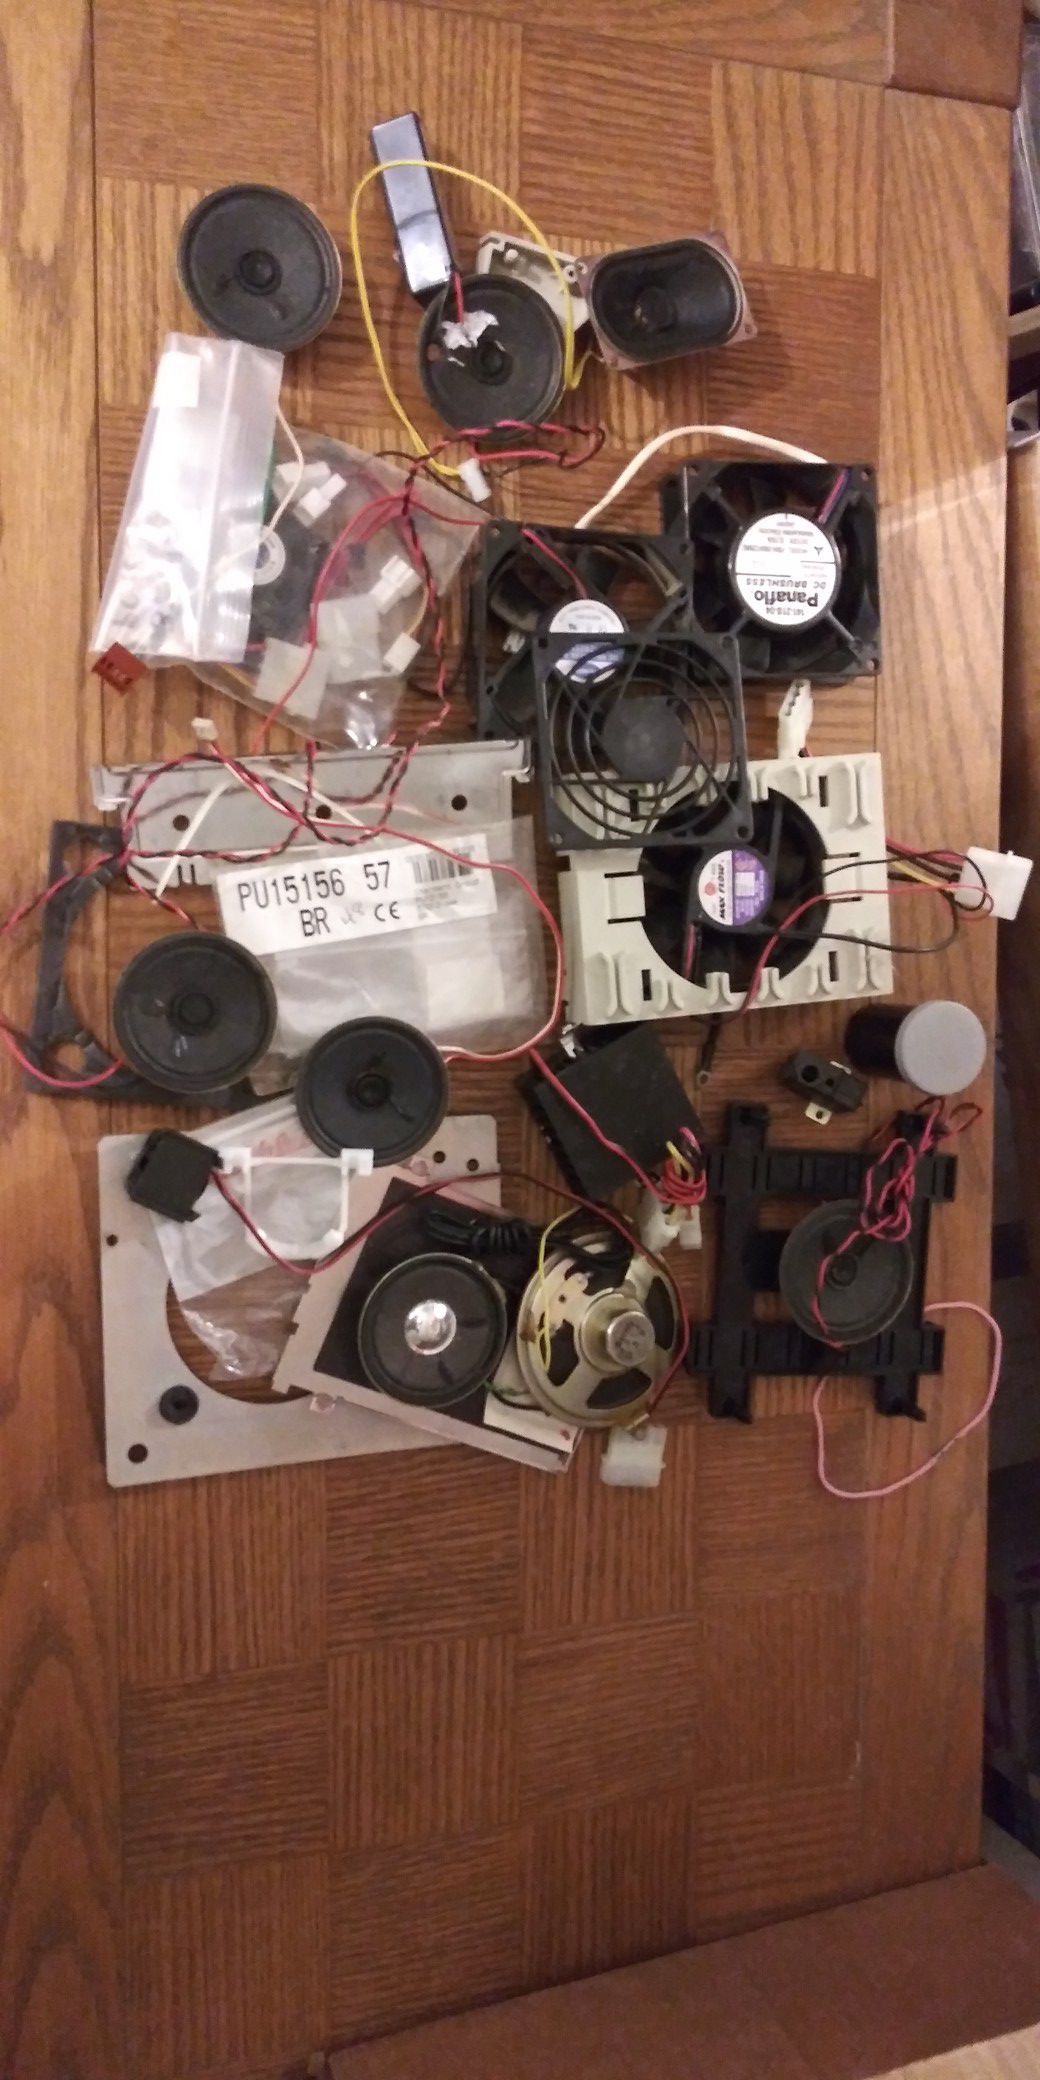 Assorted computer parts